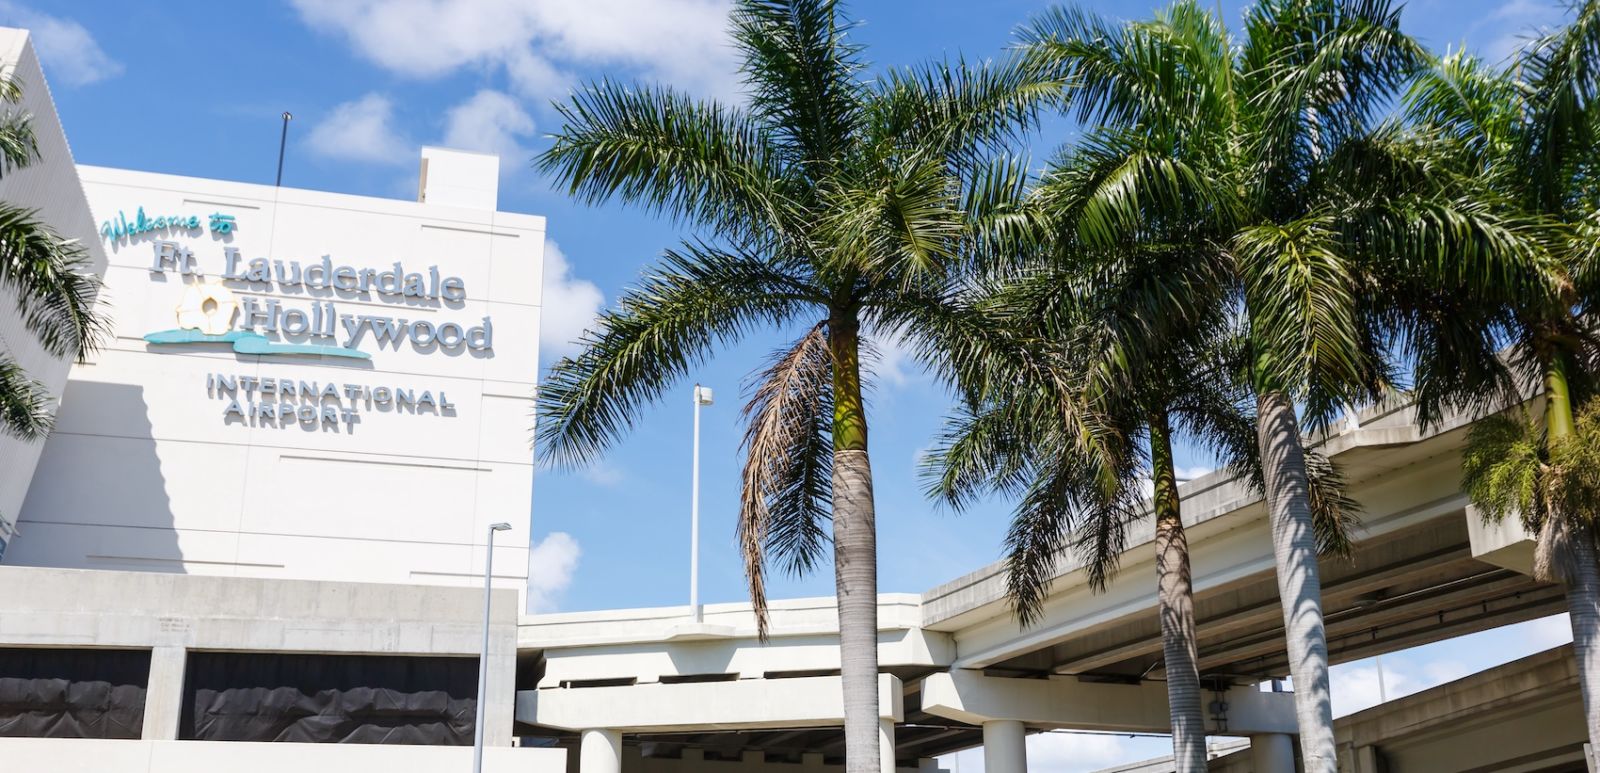 Fort Lauderdale airport. Photo via Shutterstock.